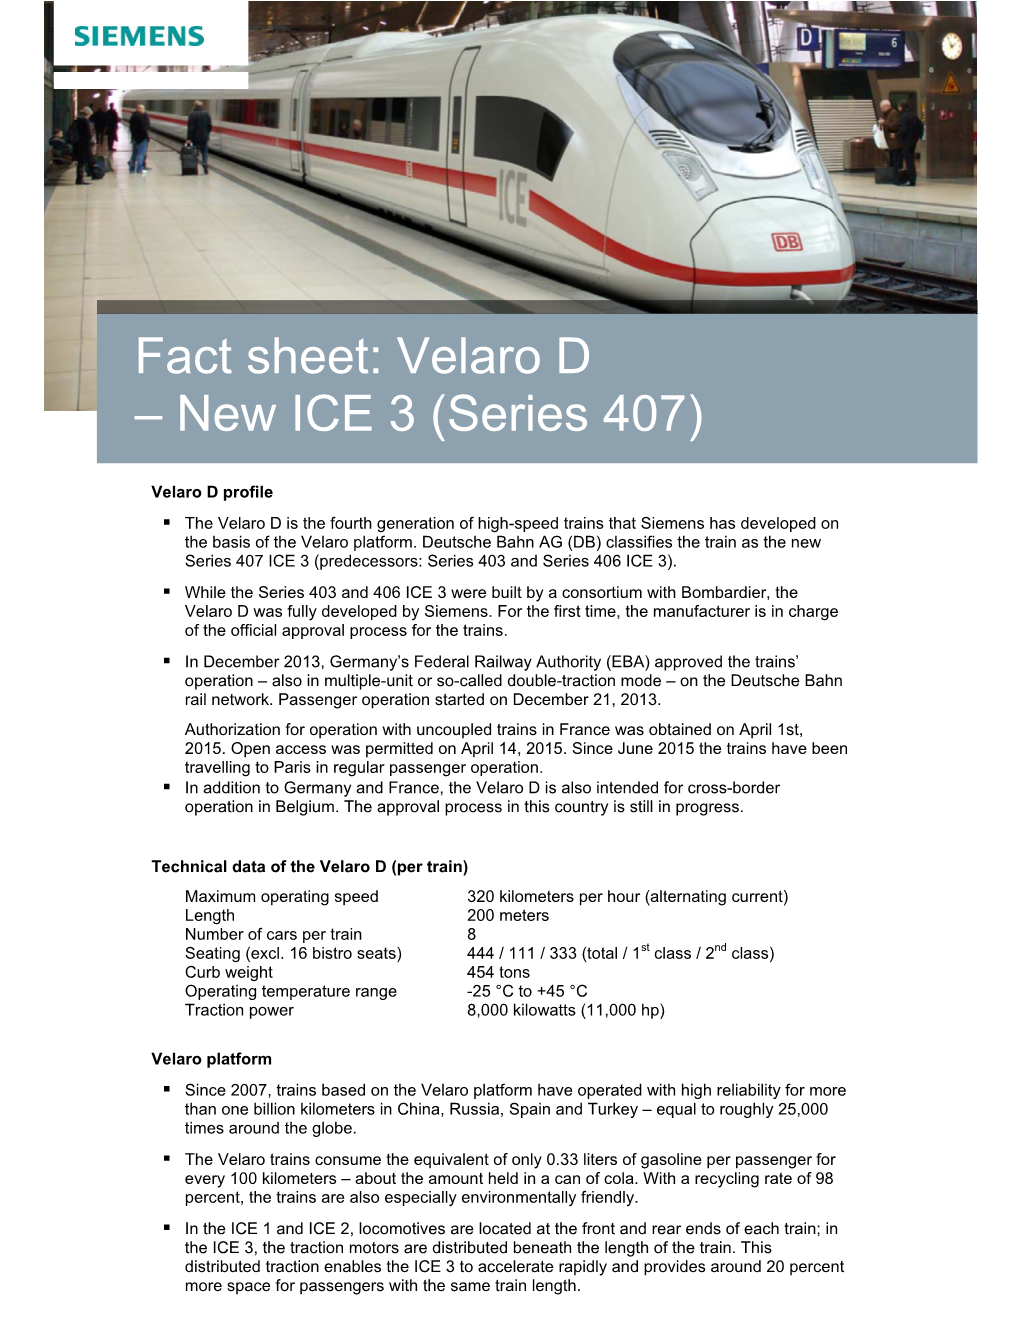 Fact Sheet: Velaro D – New ICE 3 (Series 407)